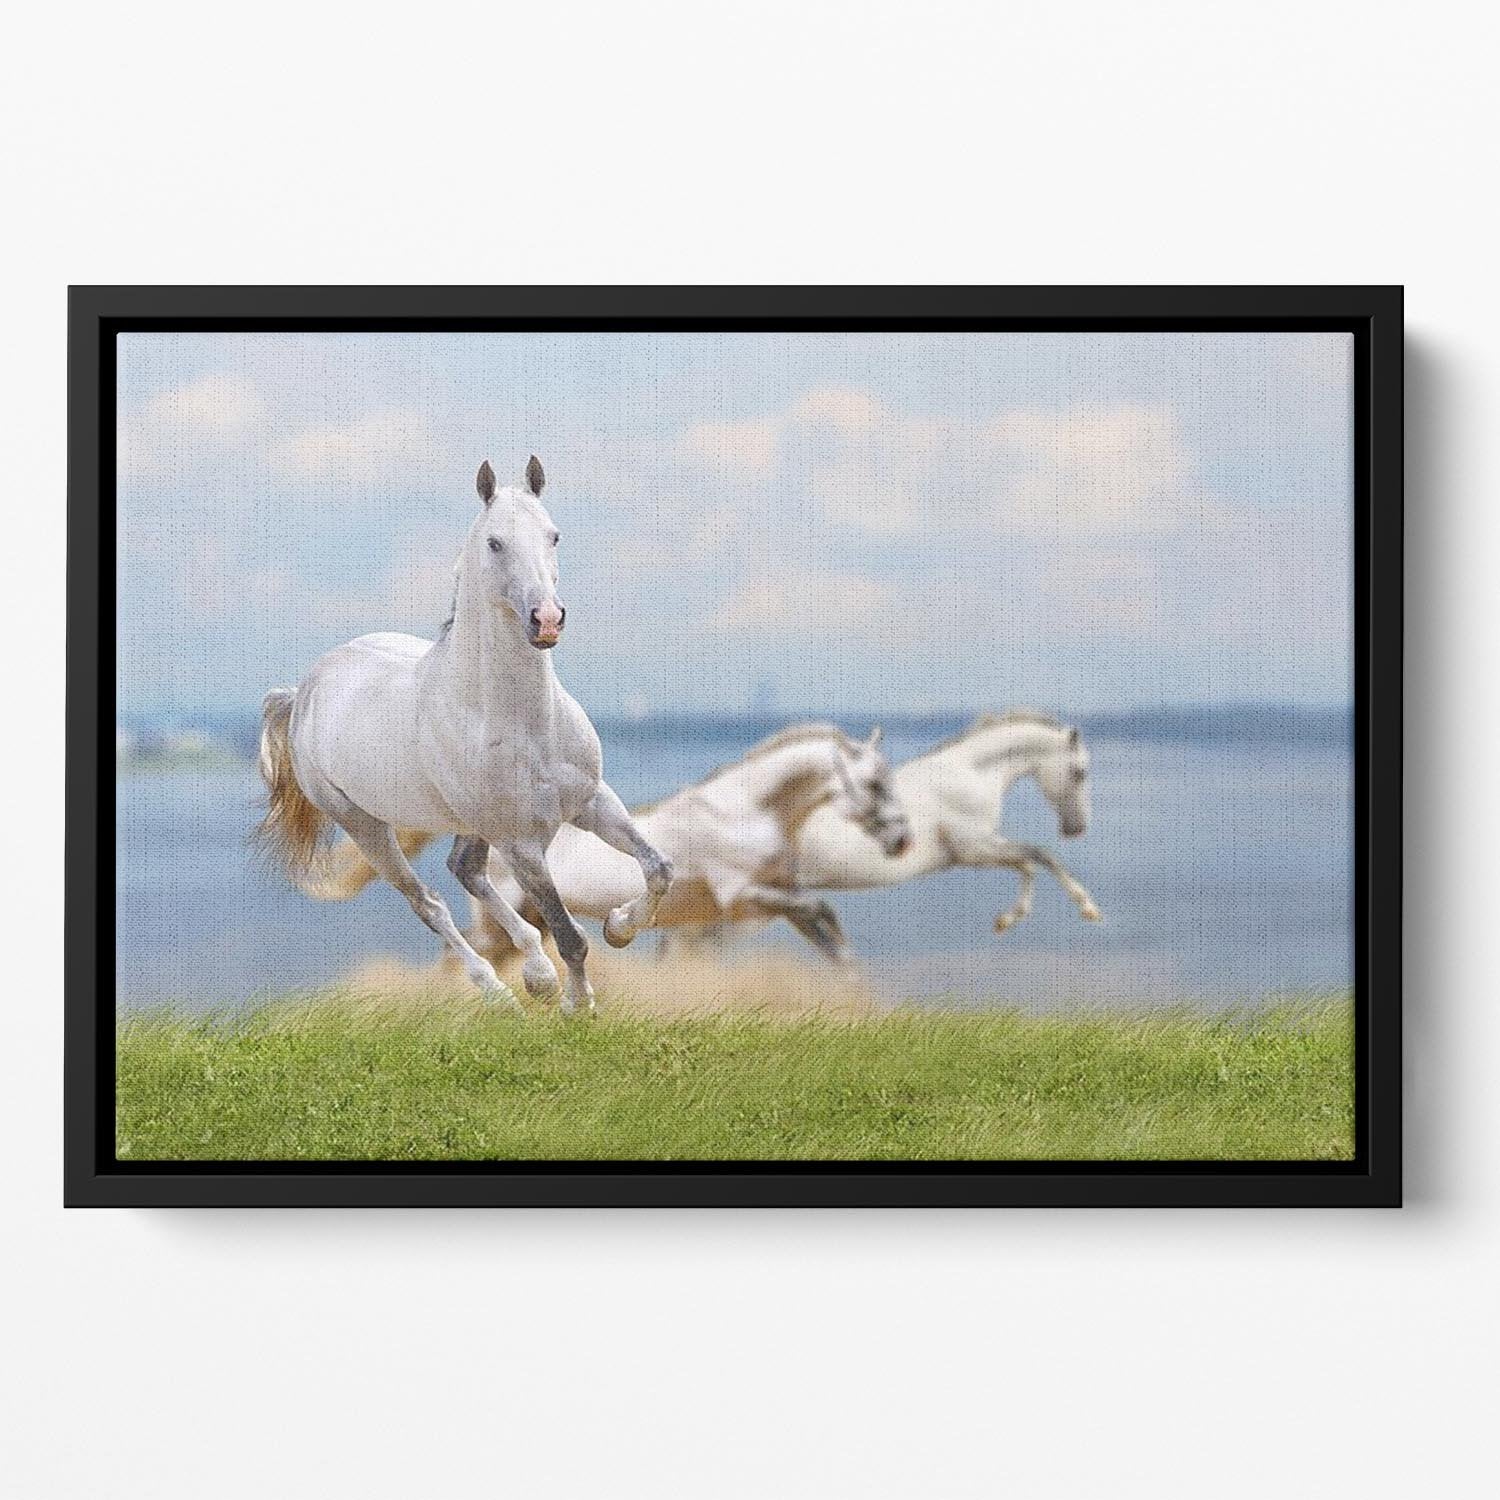 White horses running near water Floating Framed Canvas - Canvas Art Rocks - 2